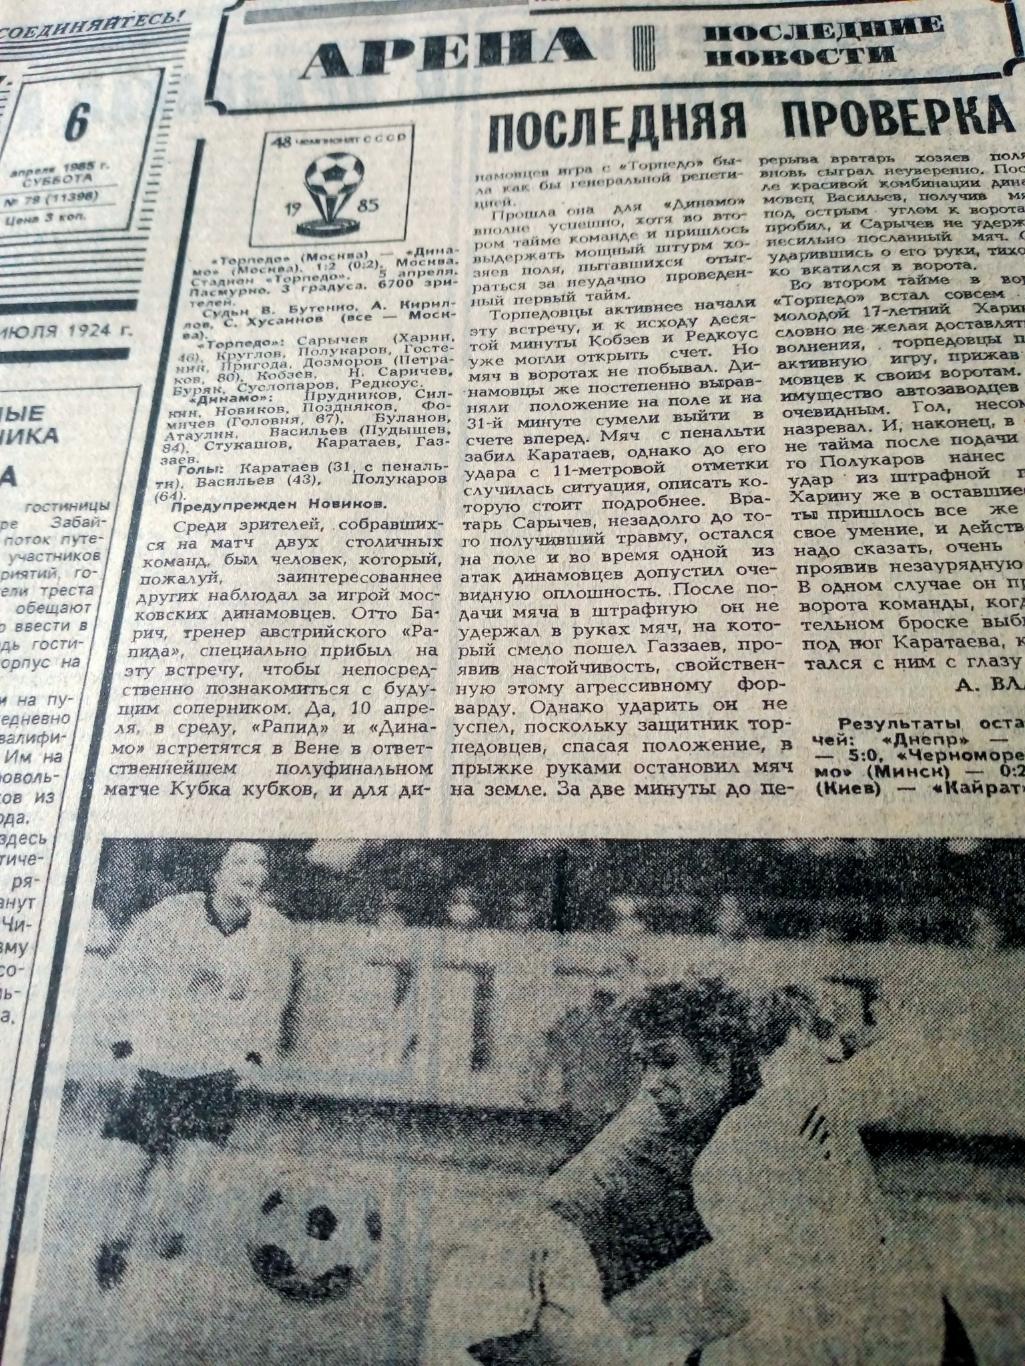 Еврокубки. Советский спорт. 1985 год. 6 апреля